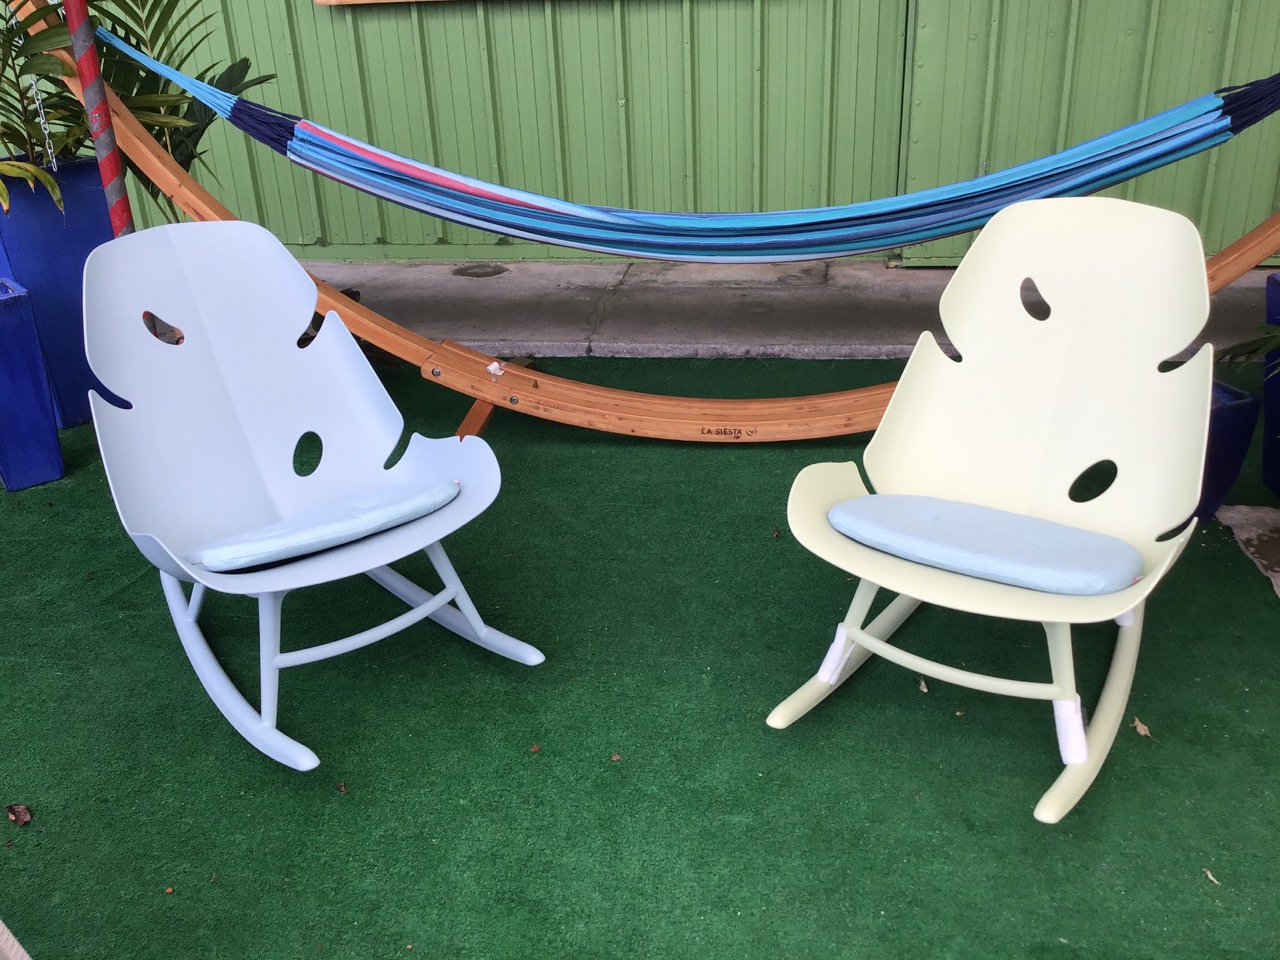 Outdoor Furniture